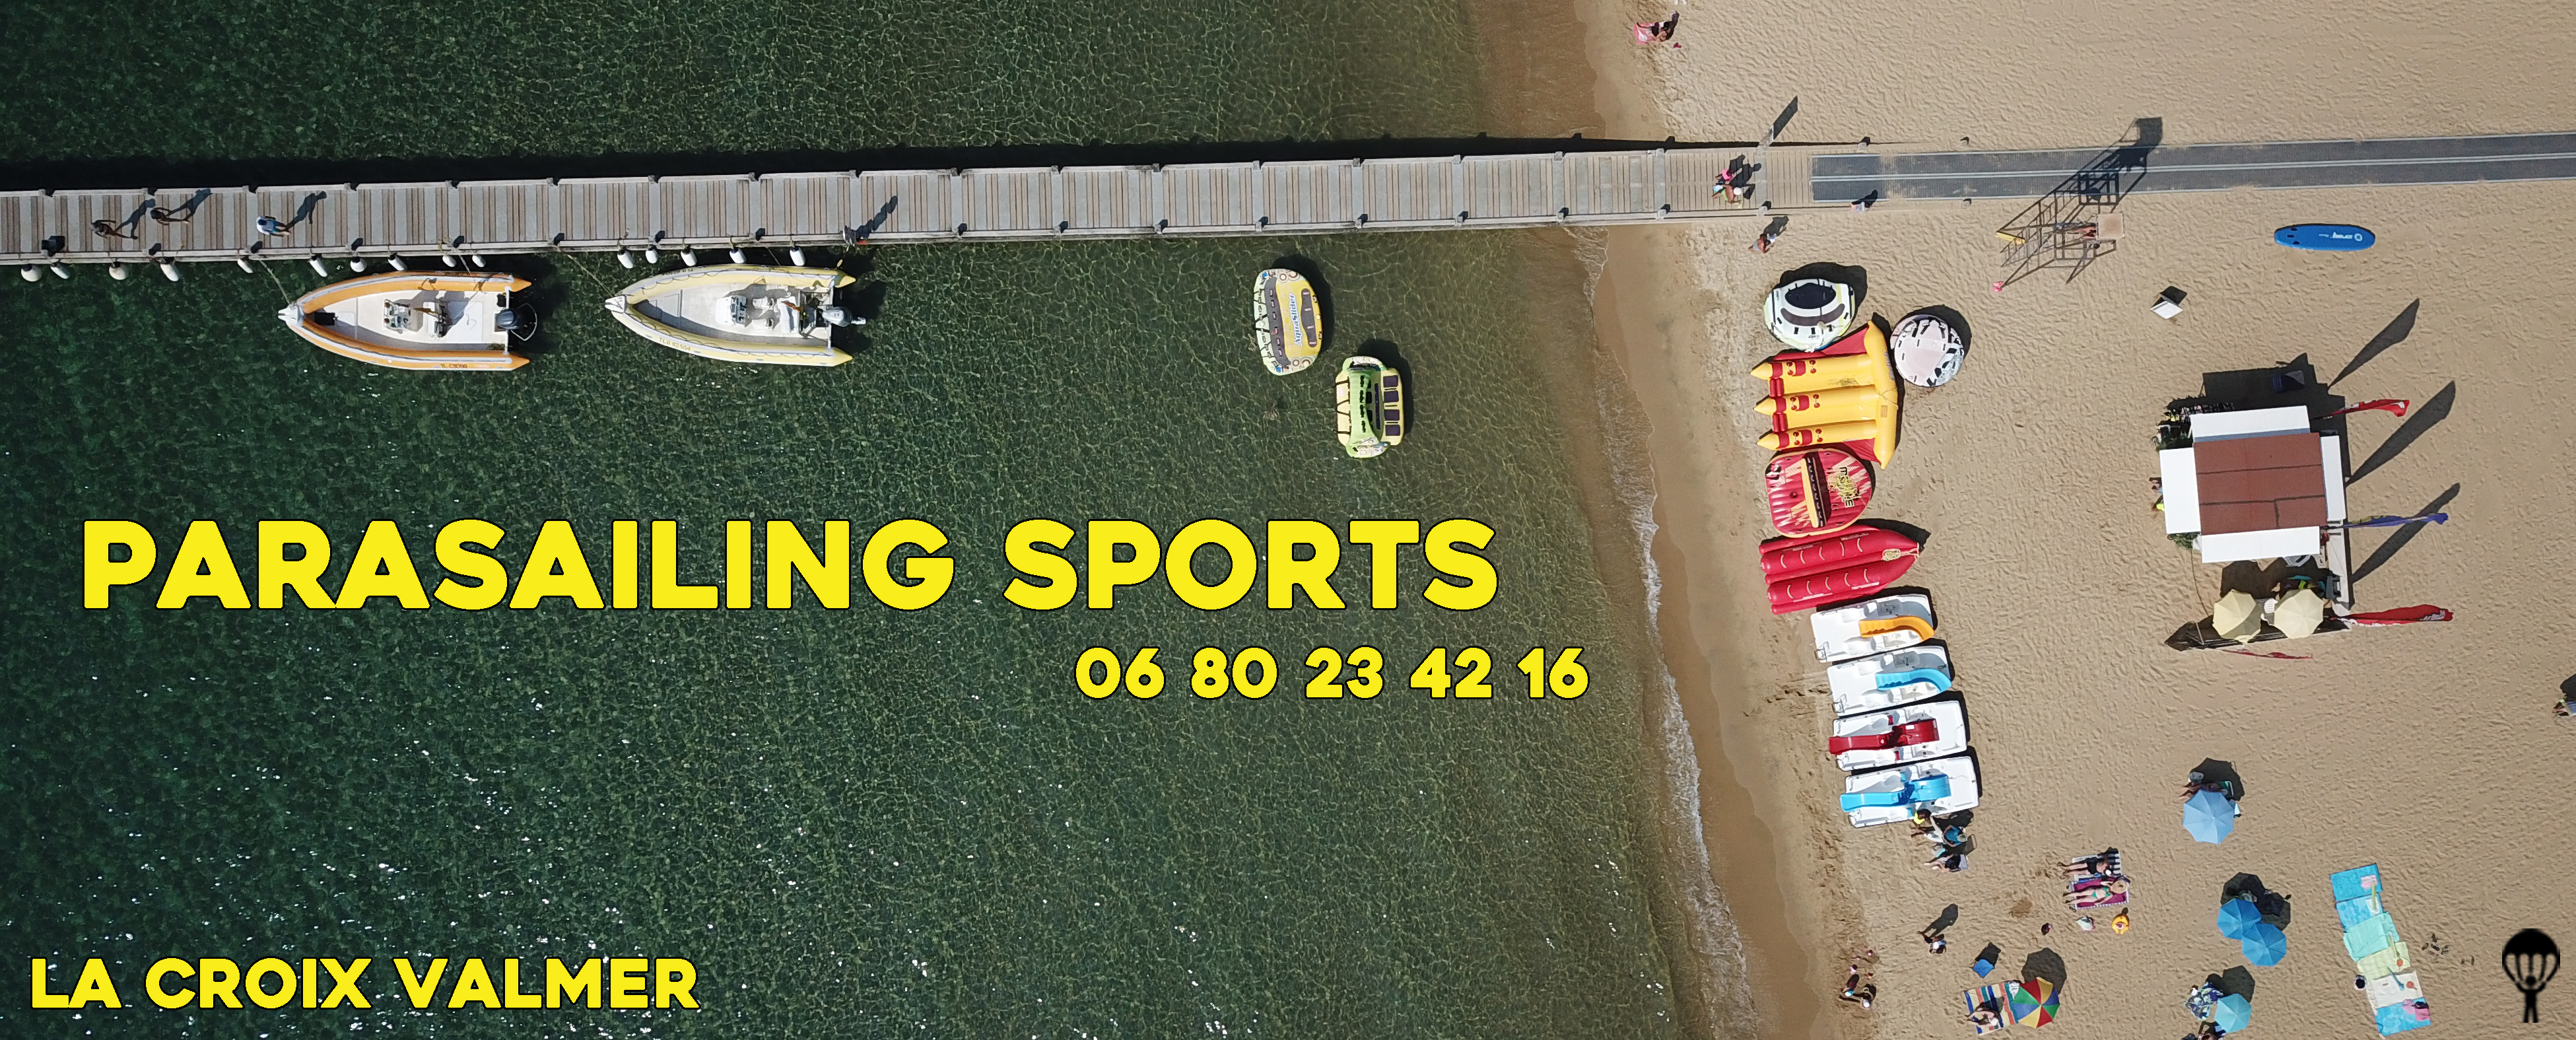 Parasailing Sports logo